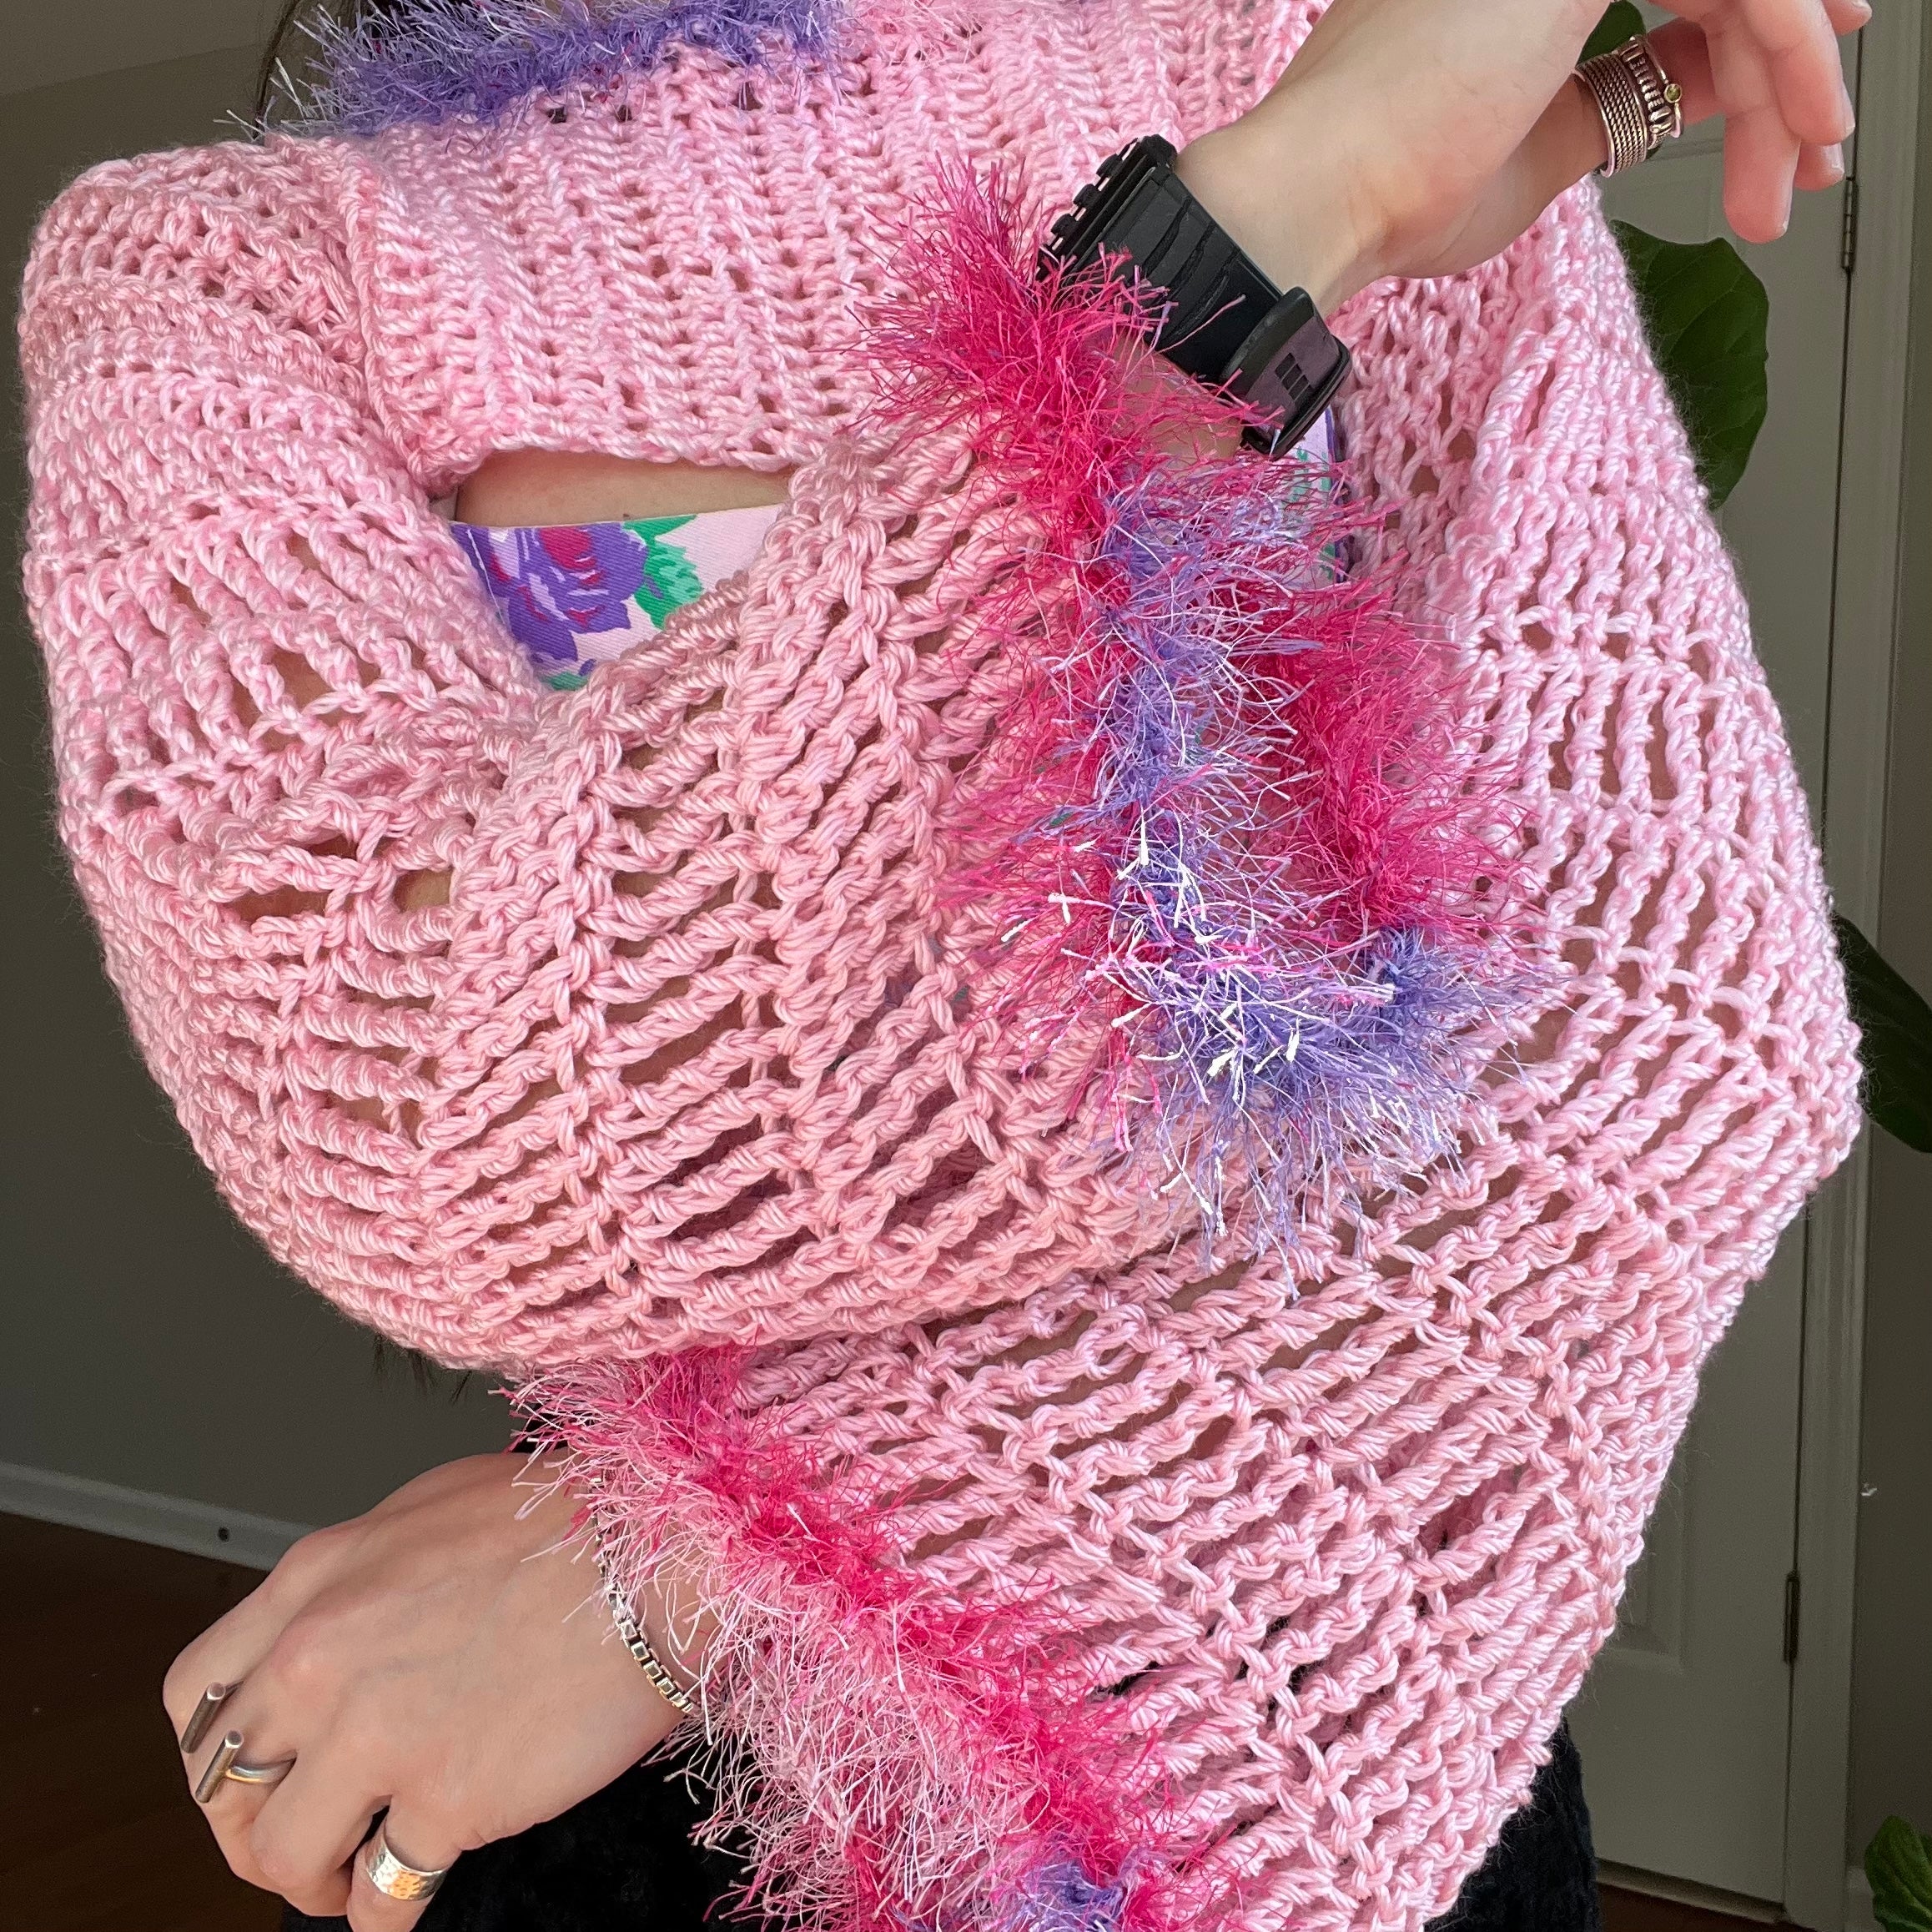 Baby Pink Crocheted Shrug Bolero